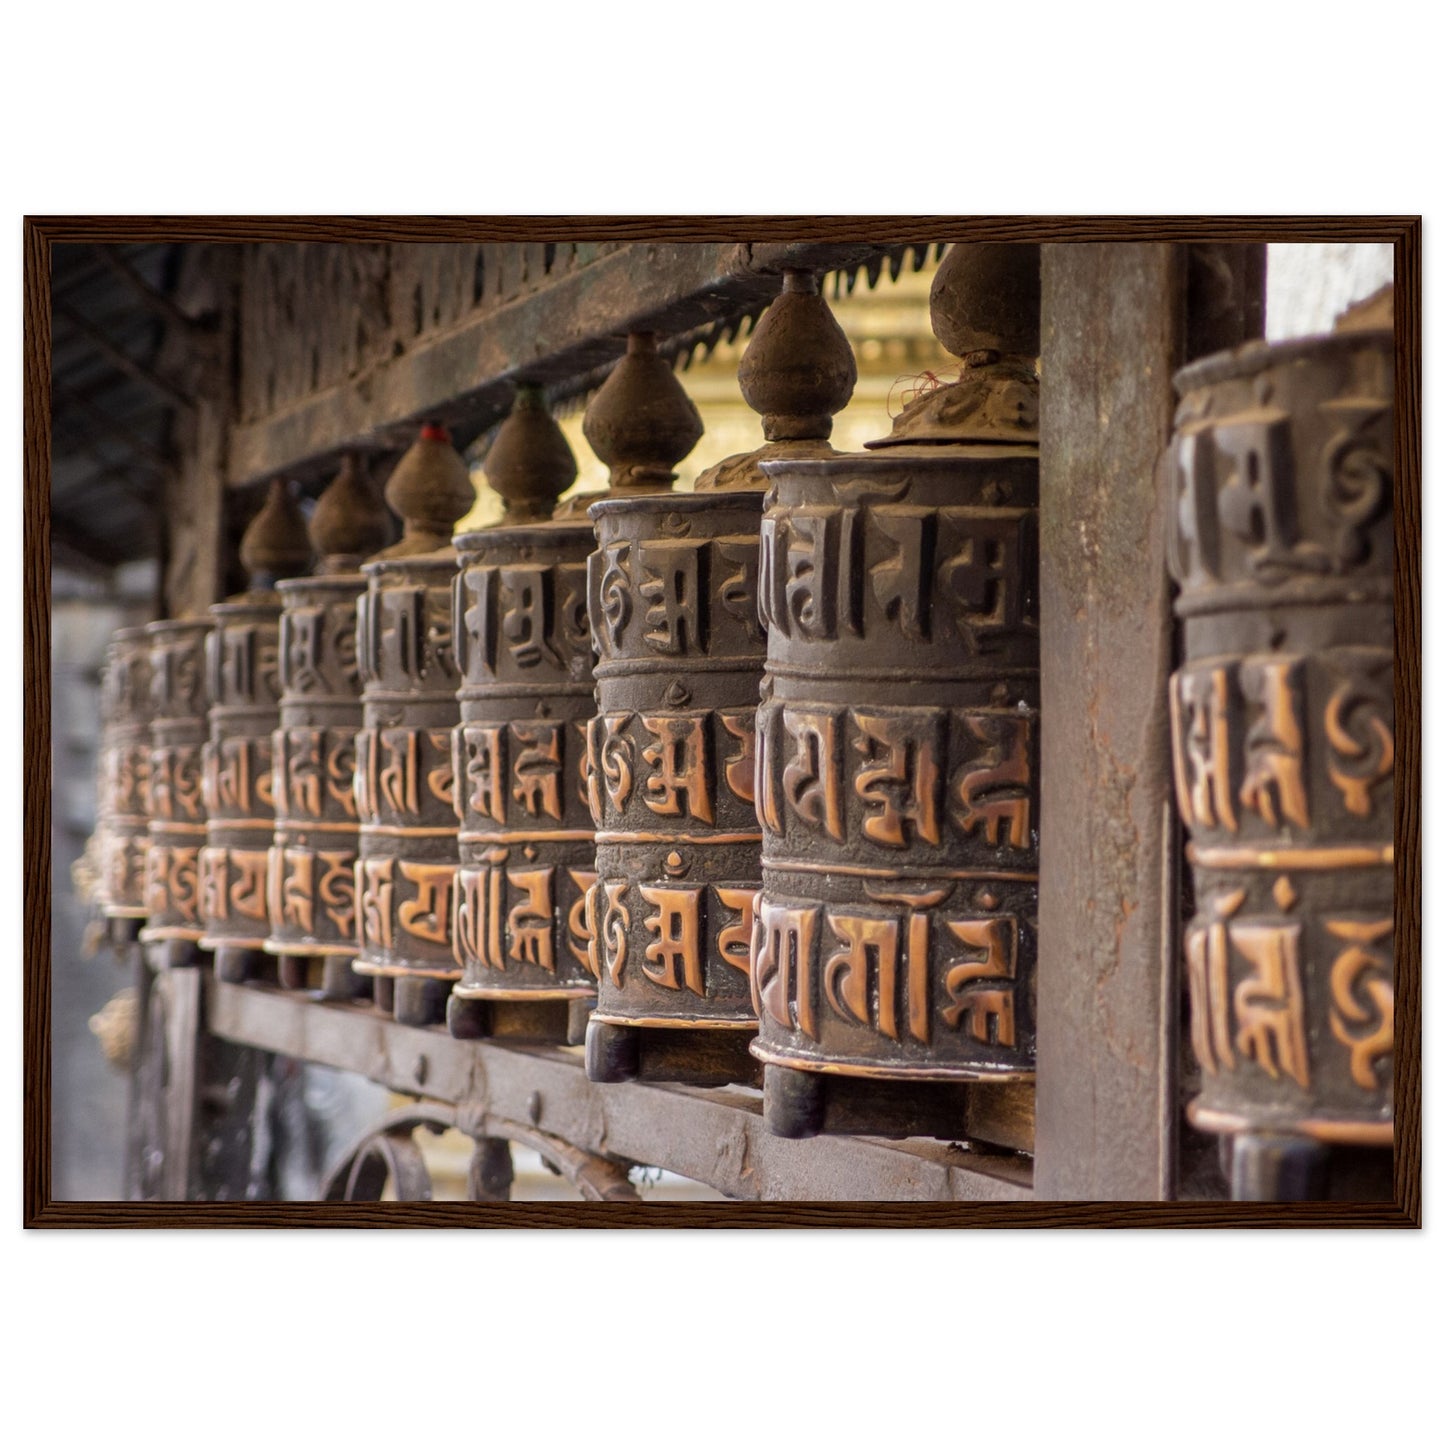 Nepalese prayer wheels